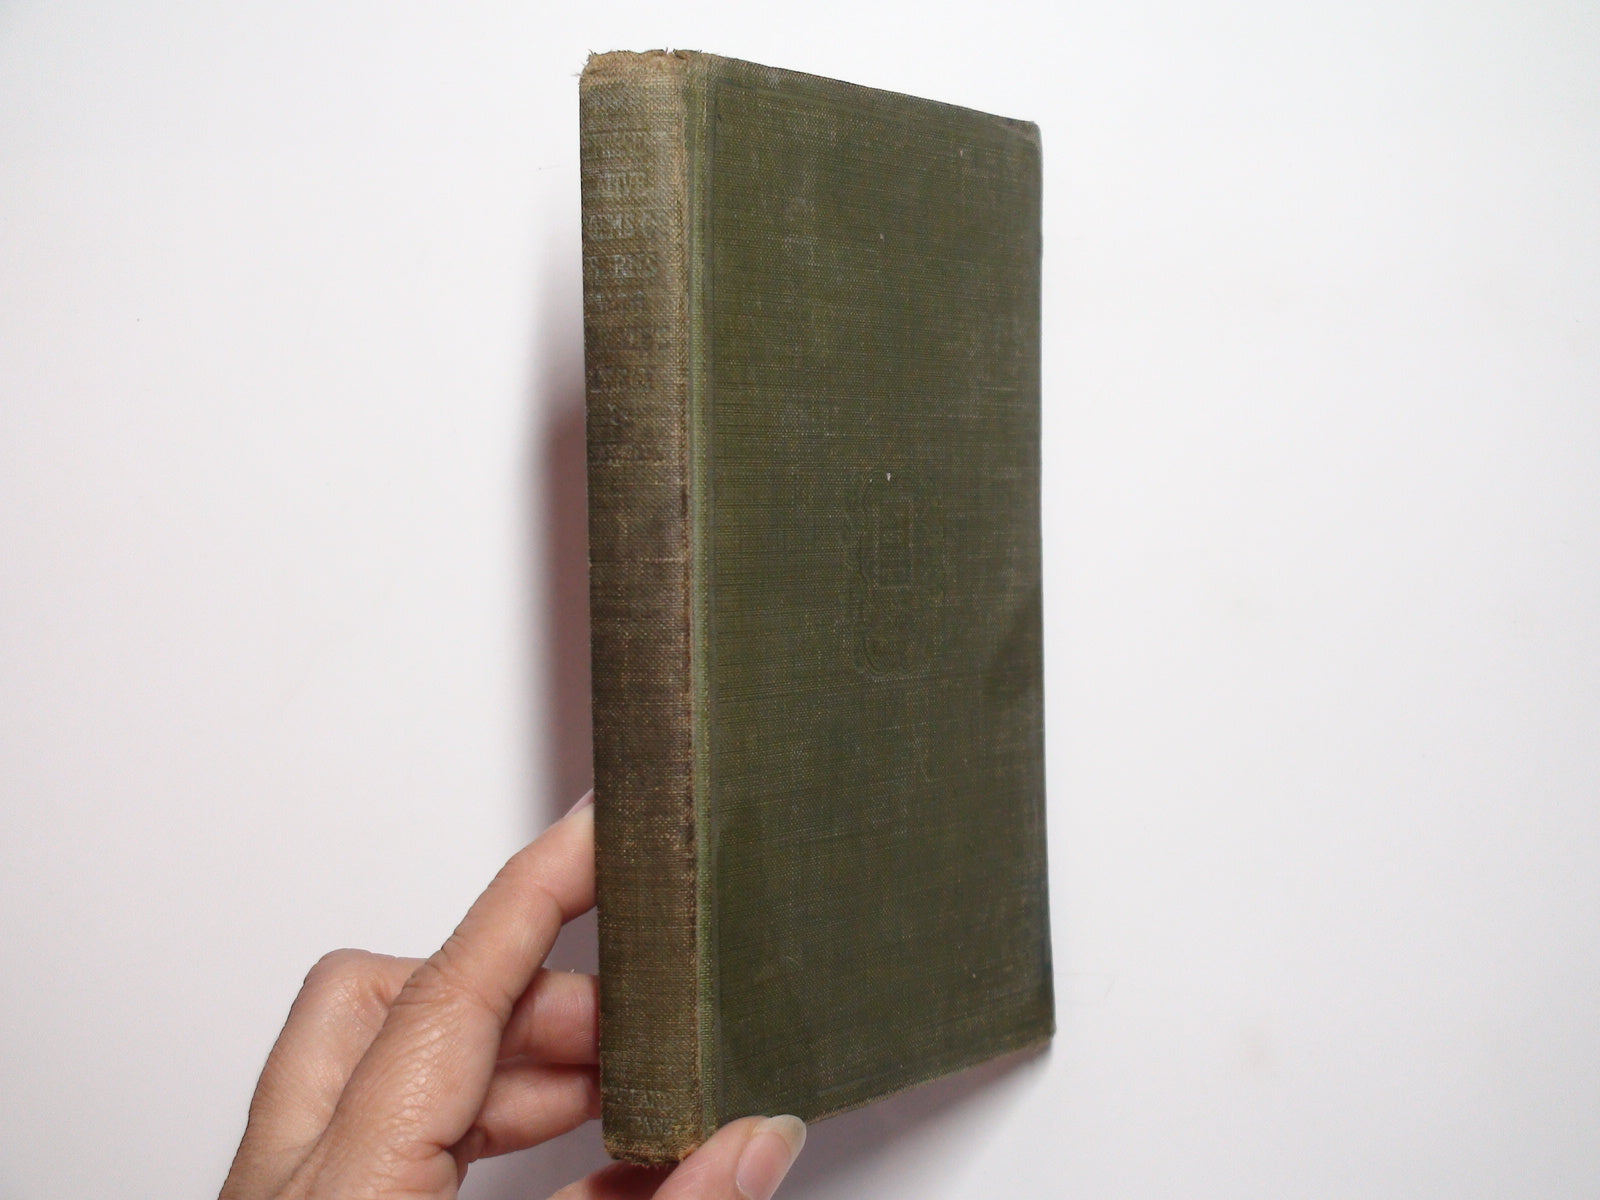 Representative Poems of Robert Burns, Edited by Charles Lane Hanson, 1924